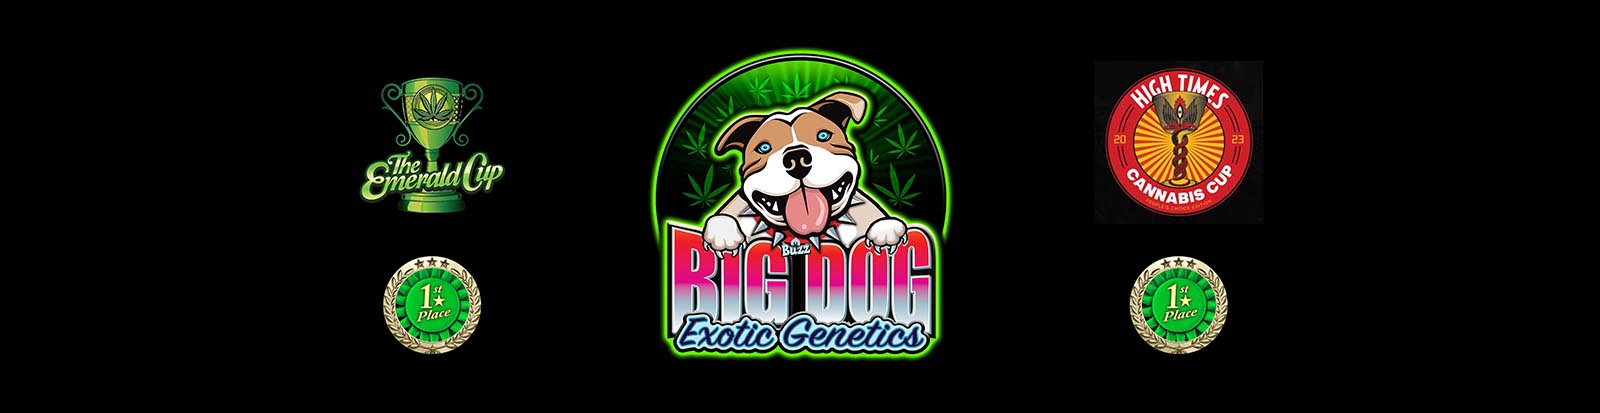 Big Dog Exotic Cannabis Genetics